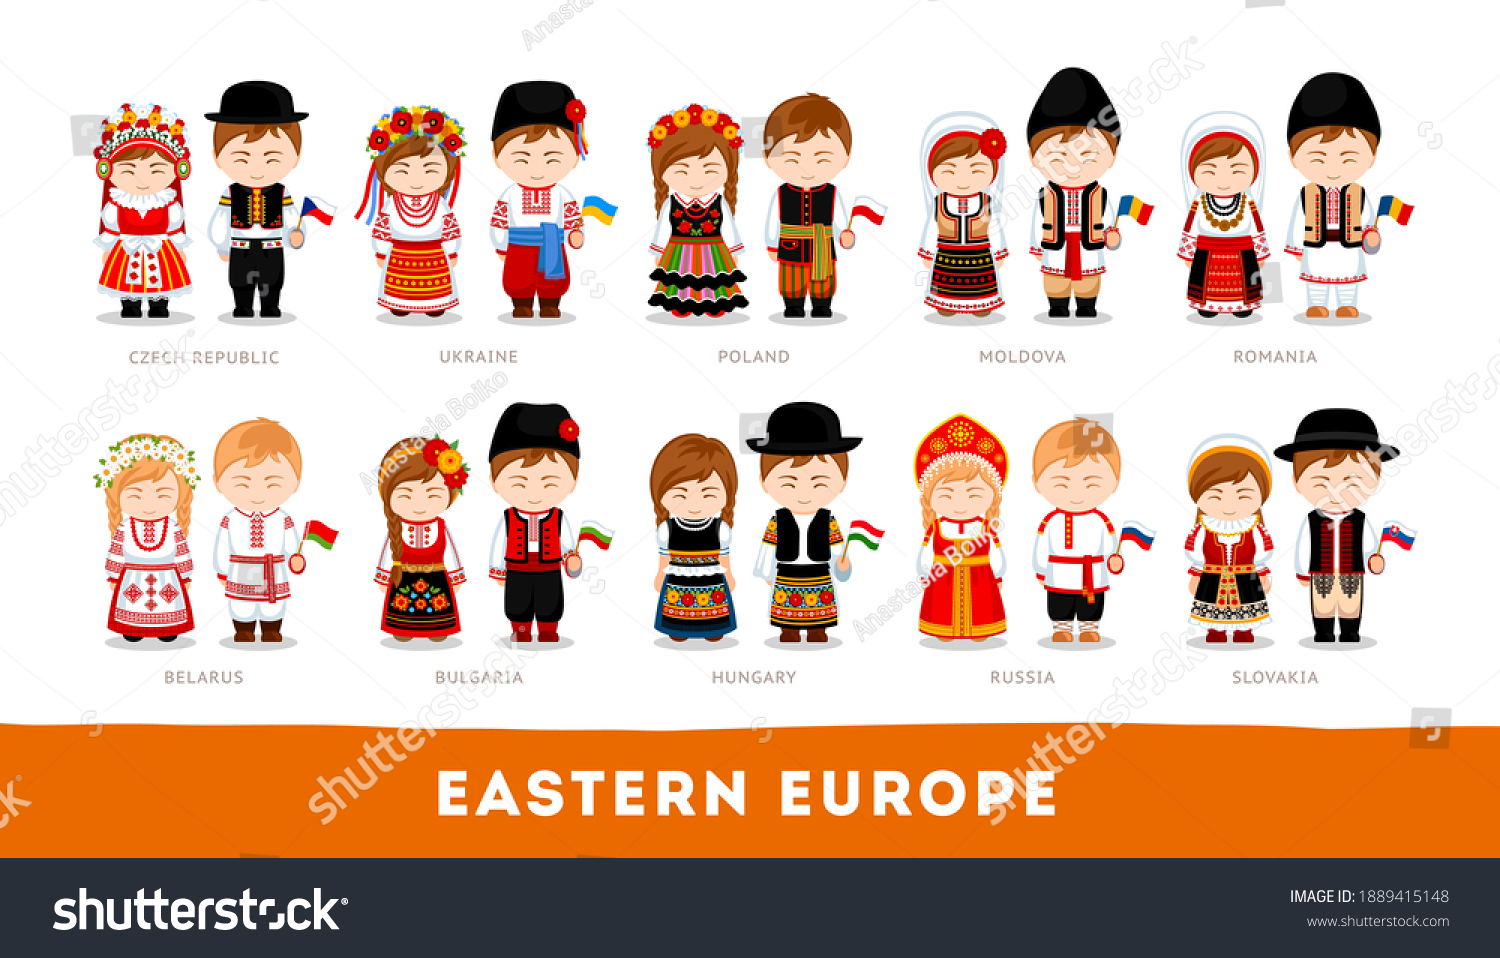 302 Slovak cartoon Images, Stock Photos & Vectors | Shutterstock